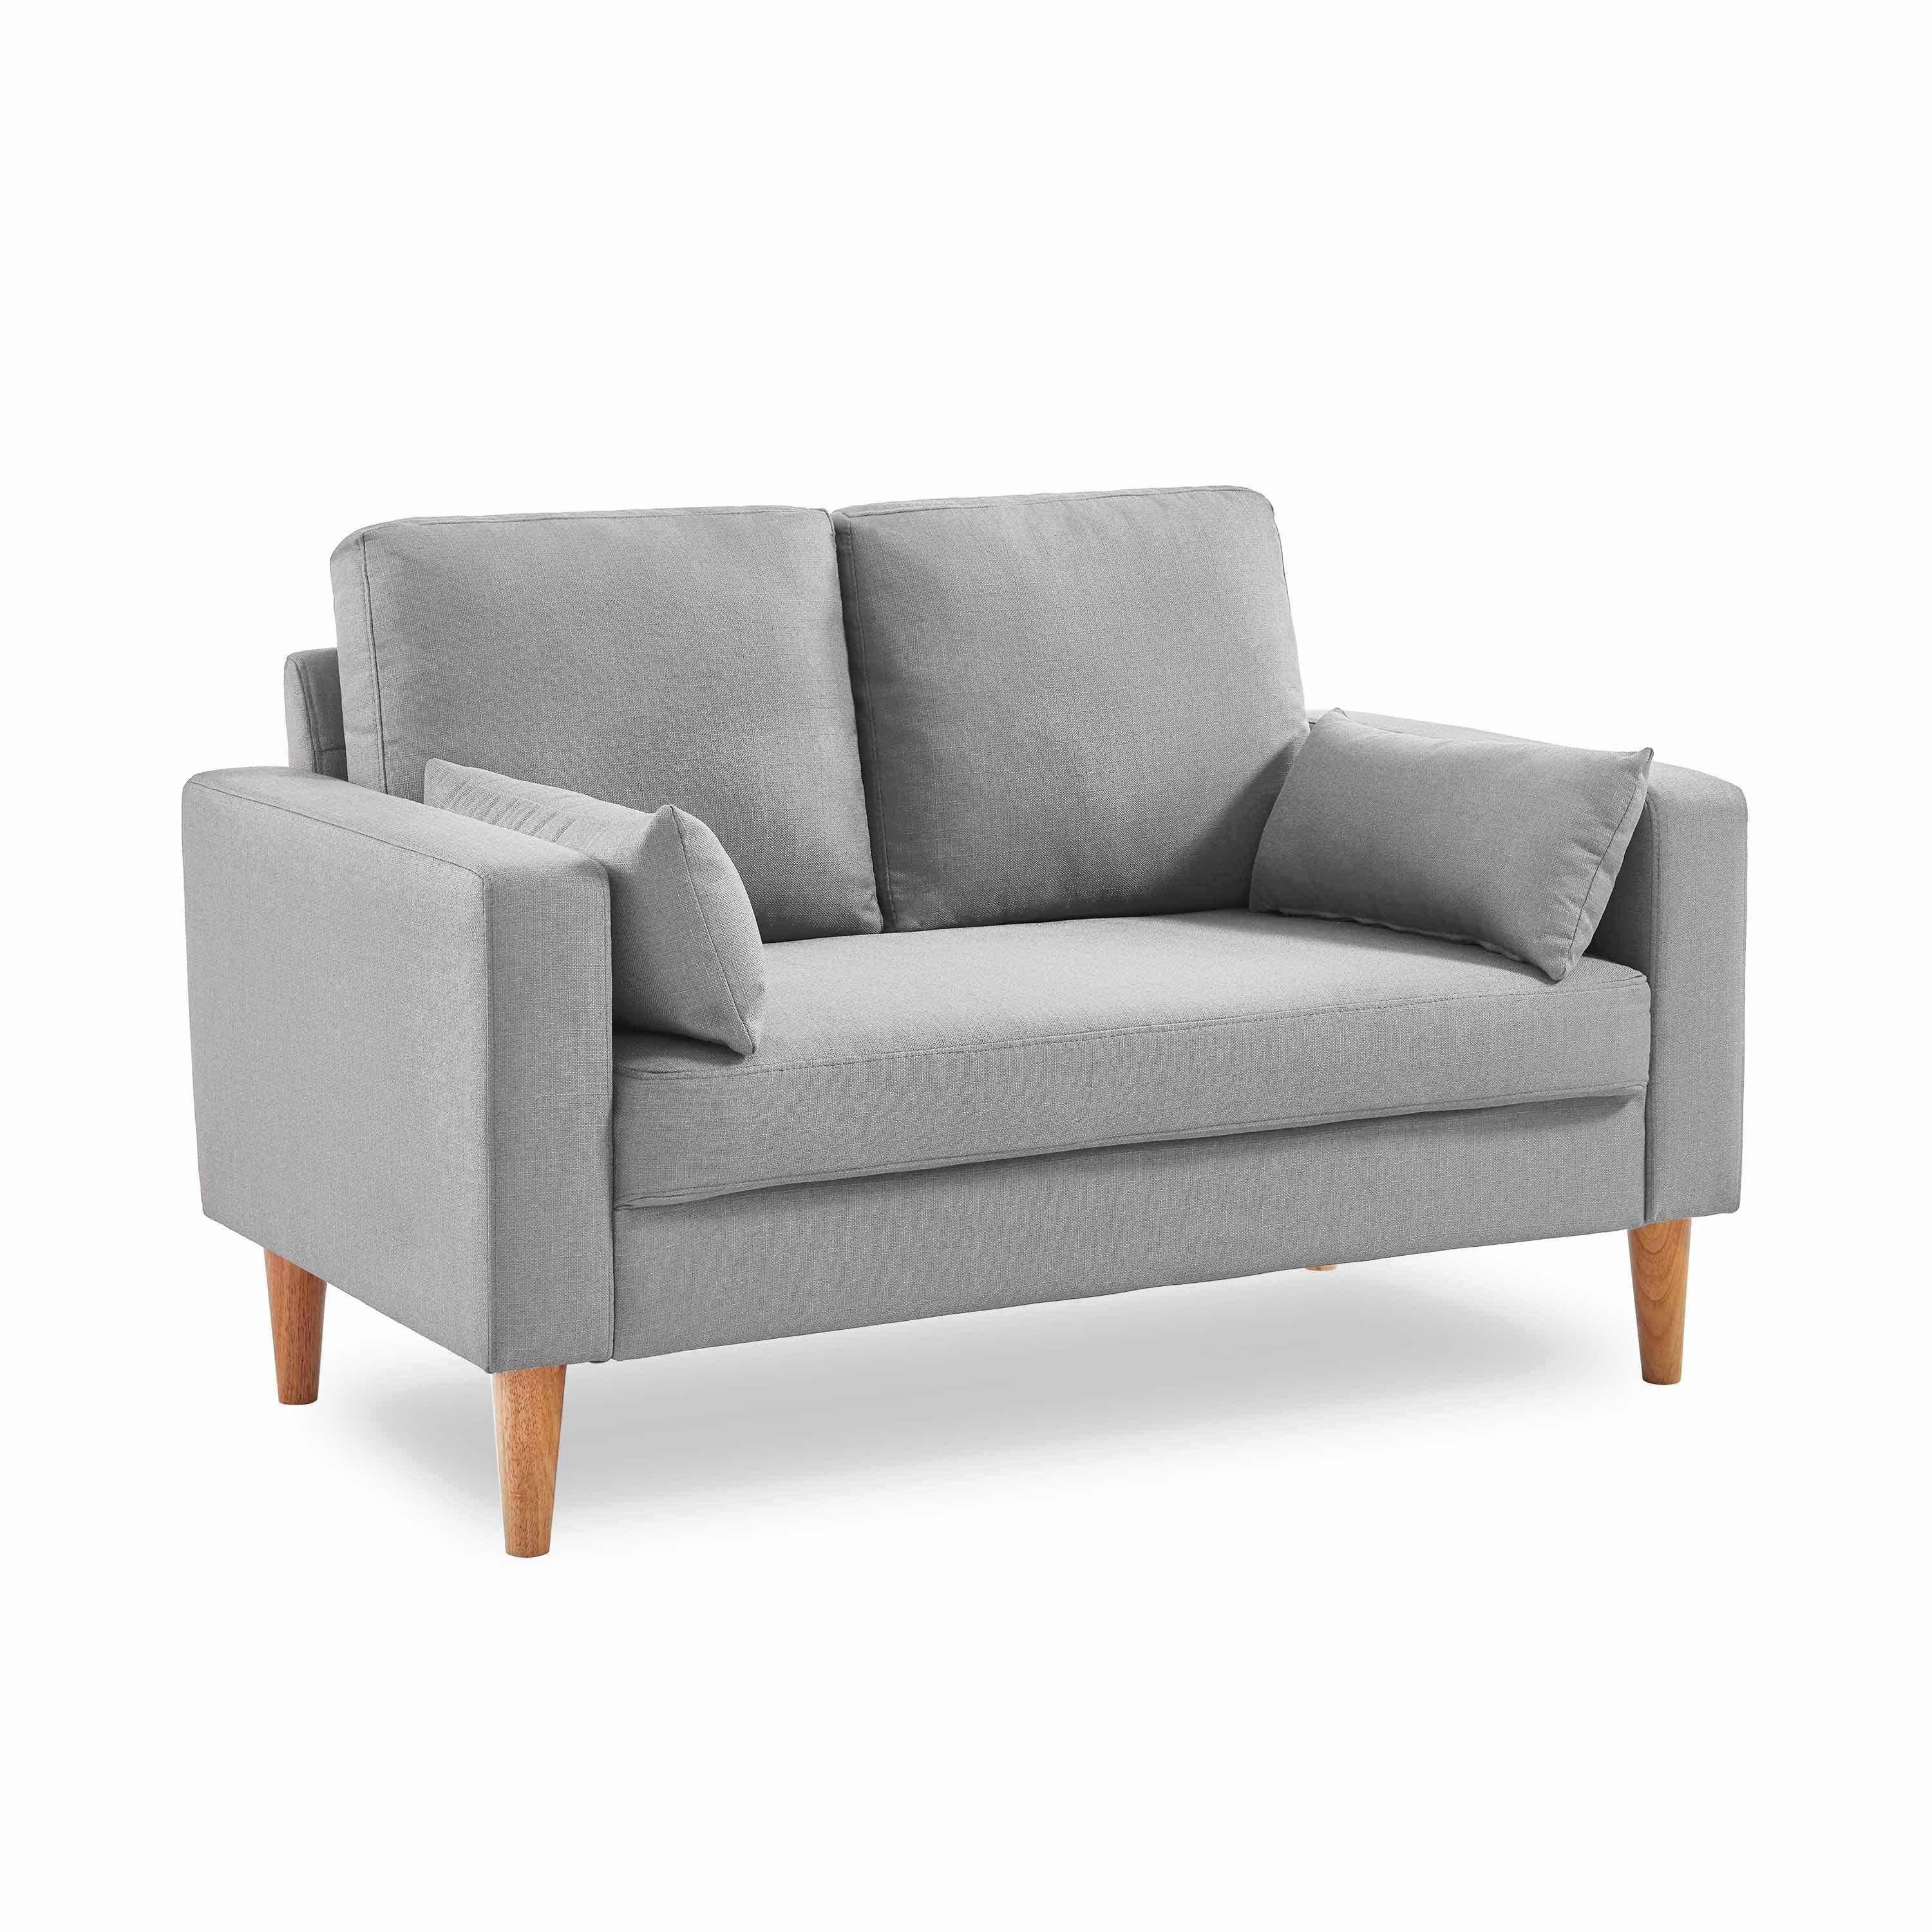 Medium 2-seater sofa Scandi-style with wooden legs - Bjorn - Light Grey,sweeek,Photo2